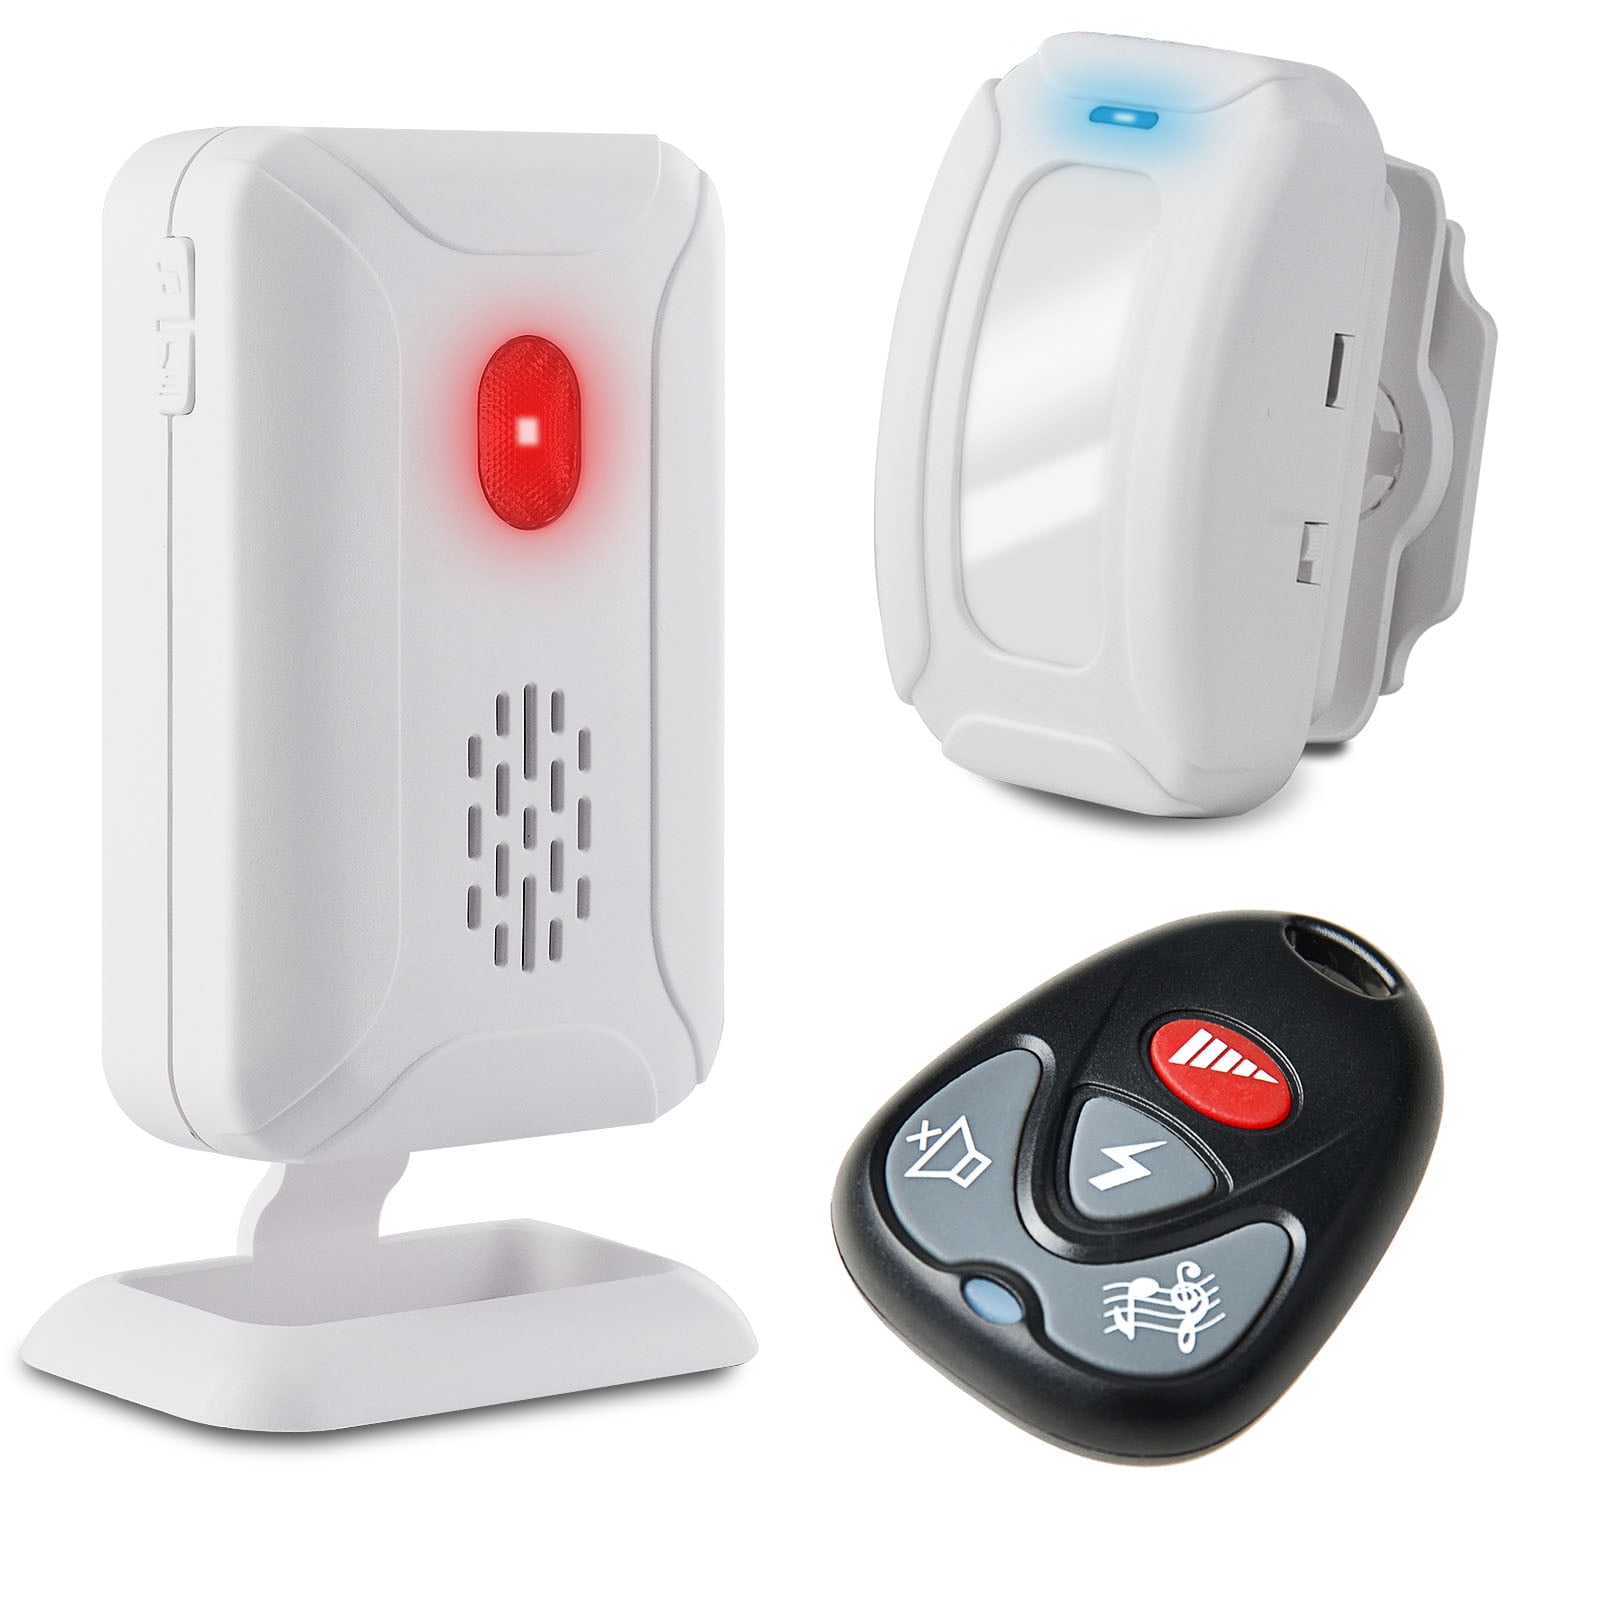 Details about   Wireless House Hotel Garage Shop Burglar Door Alarm System with Remote Control 